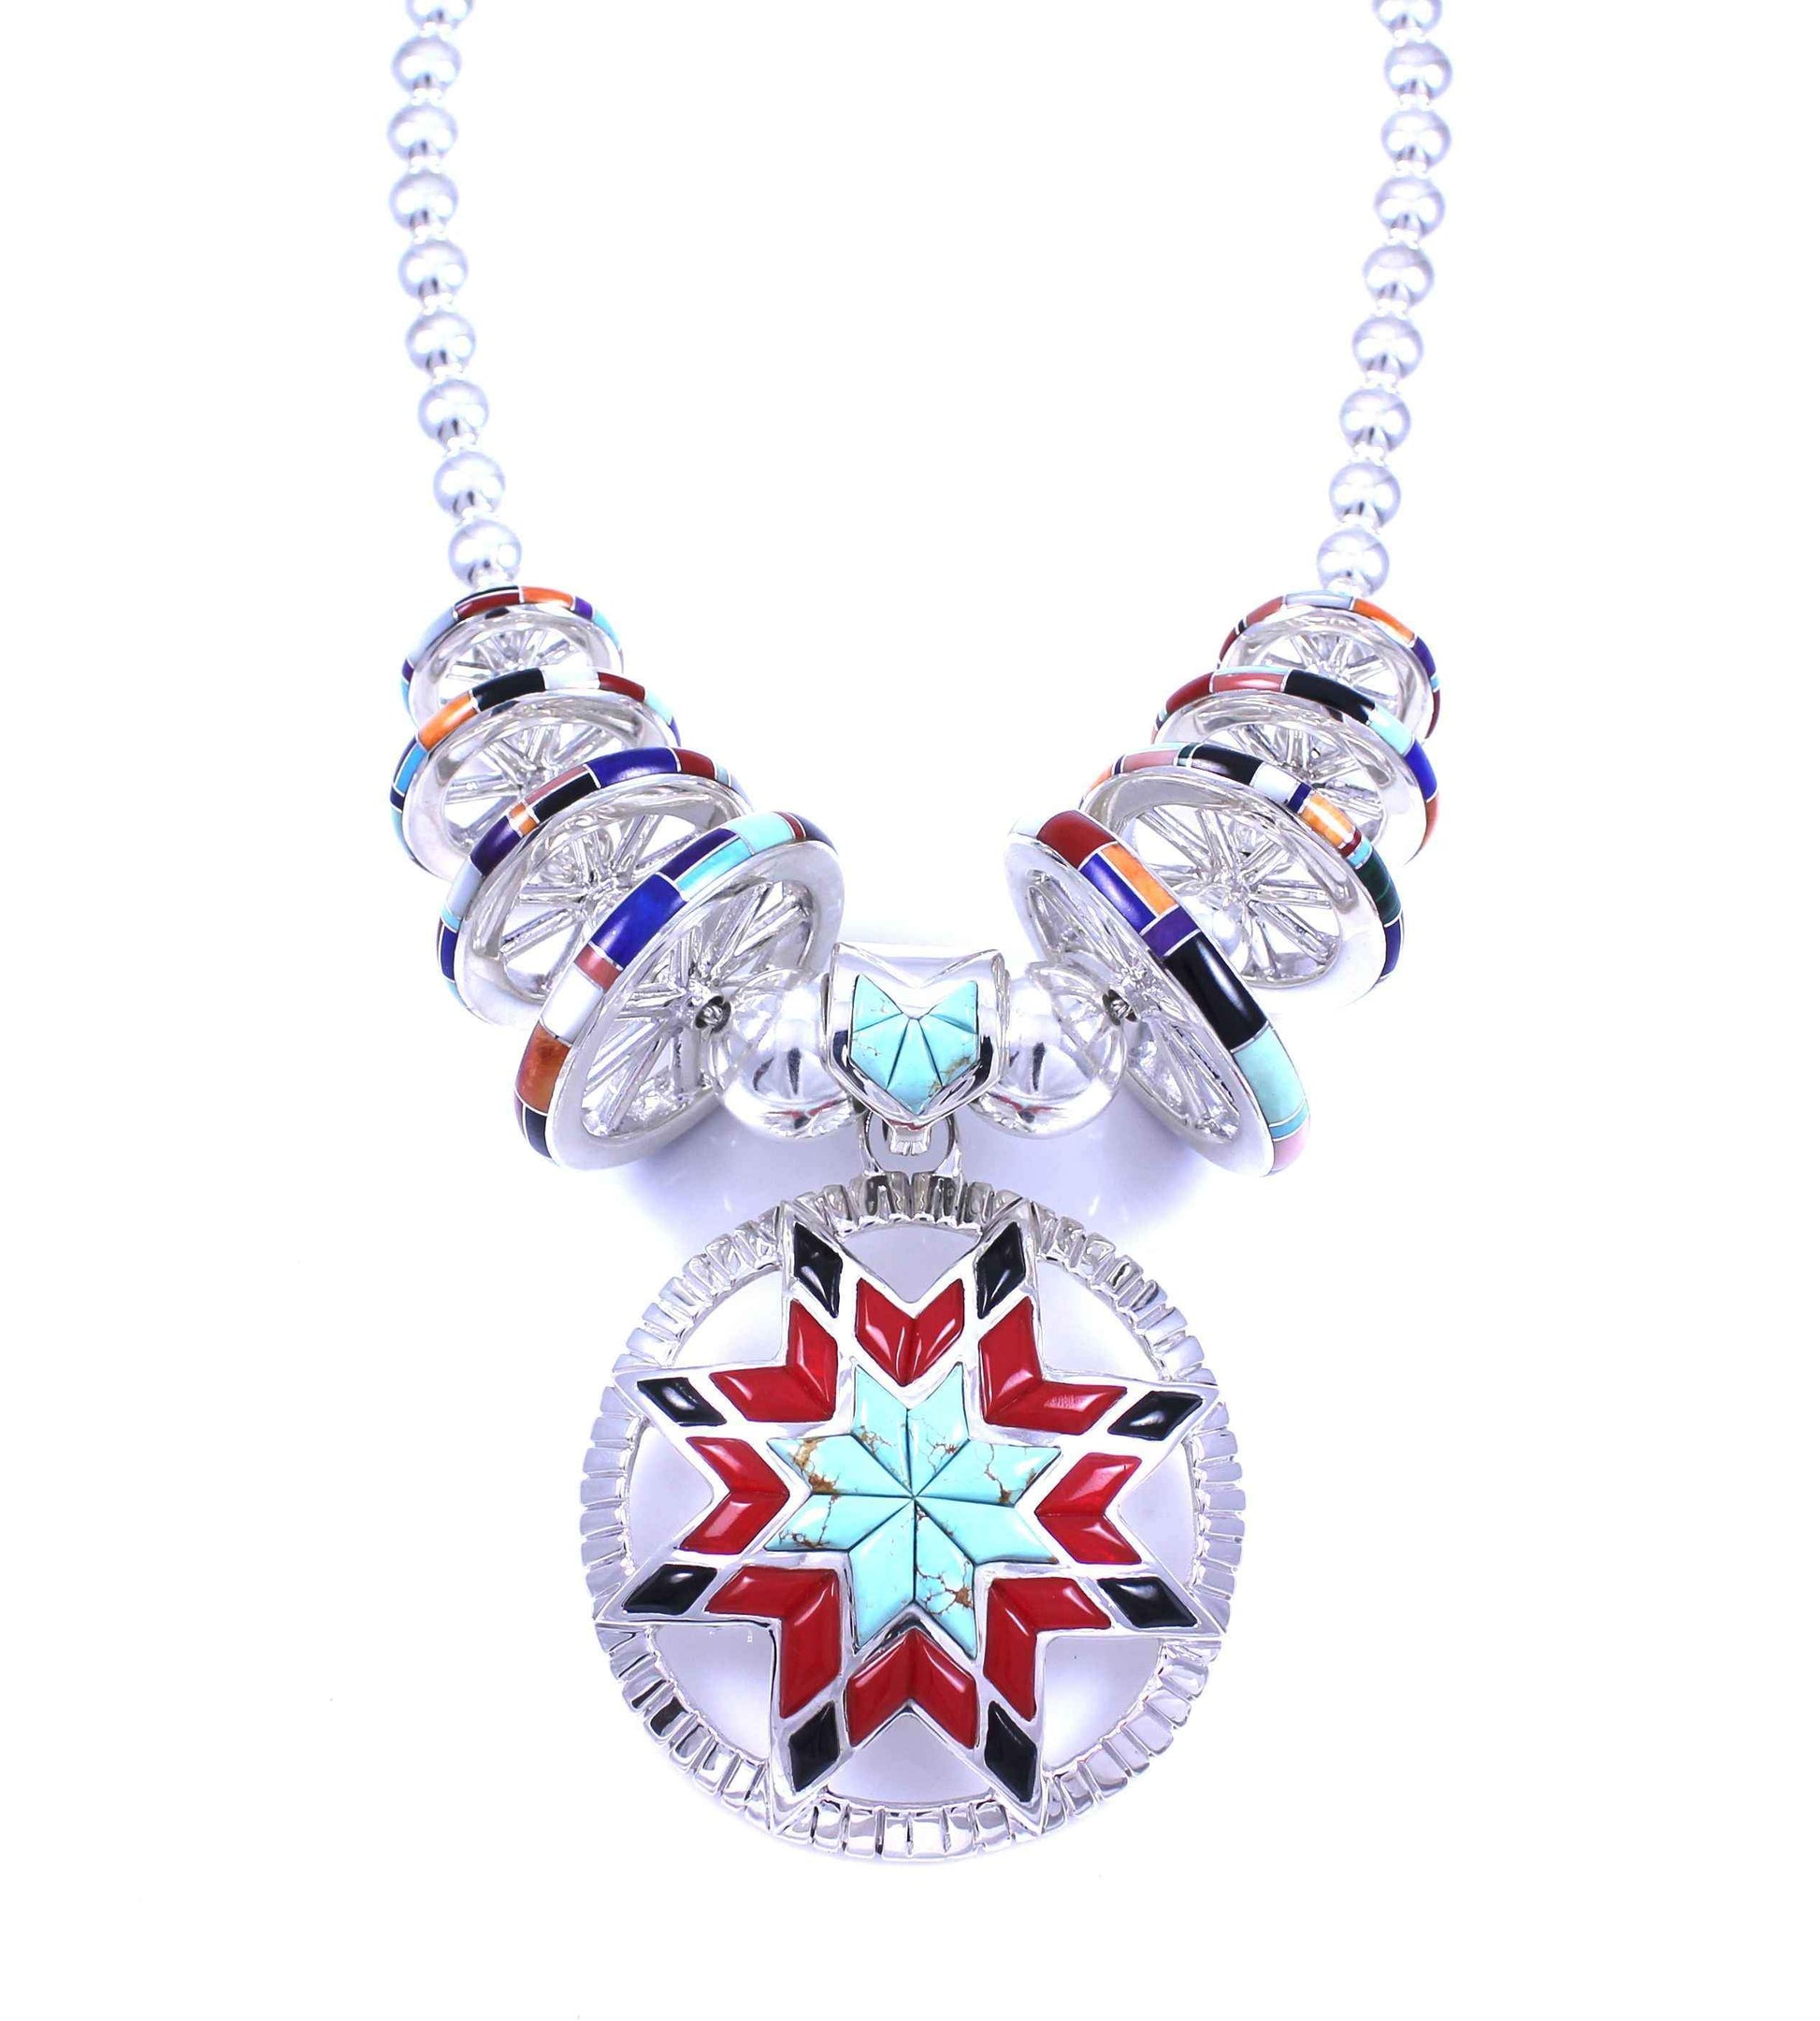 Ben Nighthorse-Lakota Sioux Star Wheels Necklace-Sorrel Sky Gallery-Jewelry